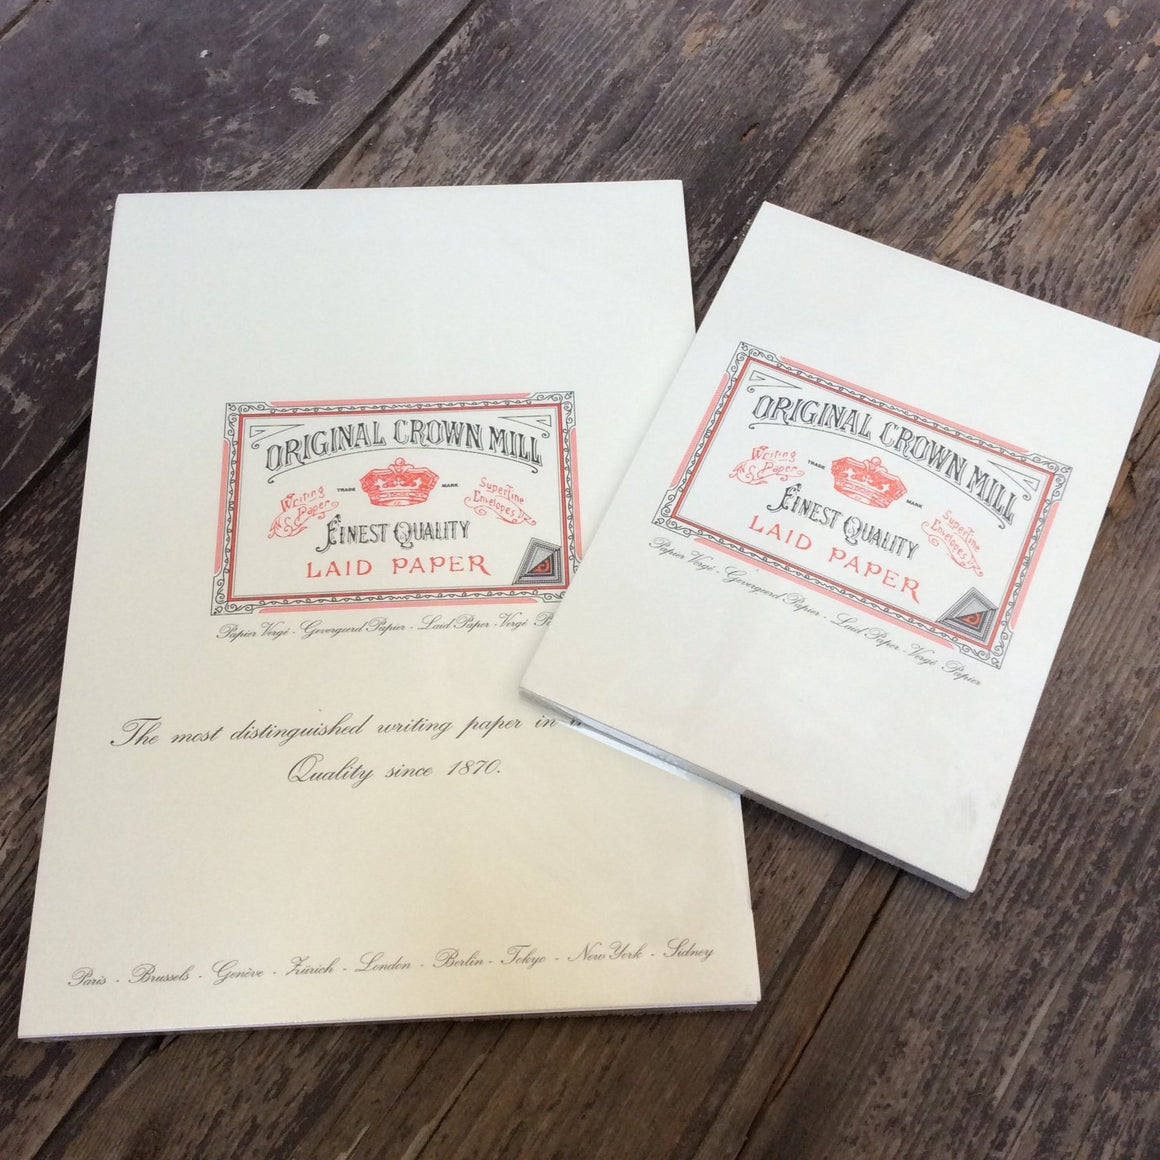 Original Crown Mill writing pads